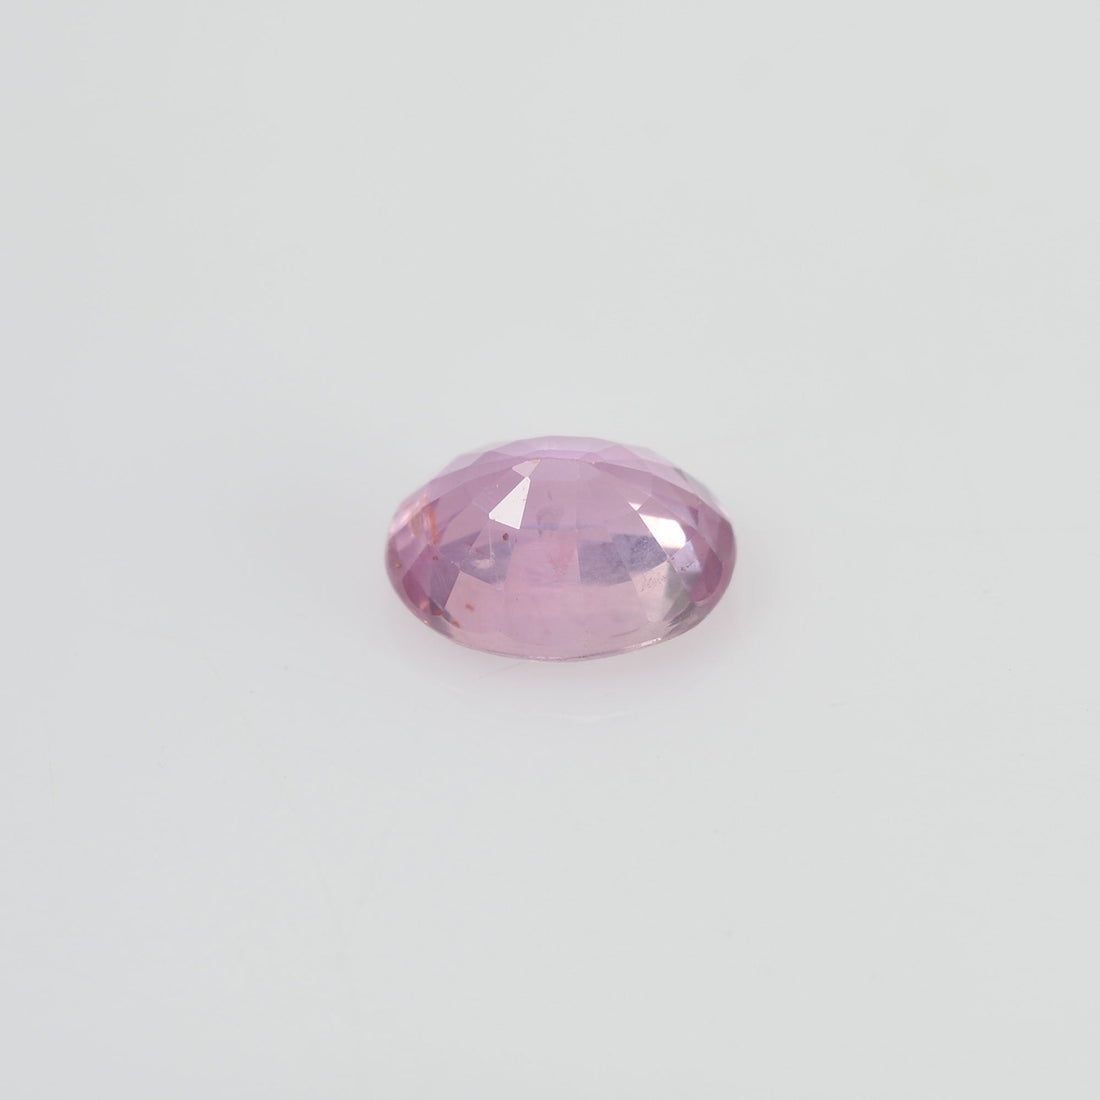 0.78 cts Natural Fancy Pink Sapphire Loose Gemstone oval Cut - Thai Gems Export Ltd.